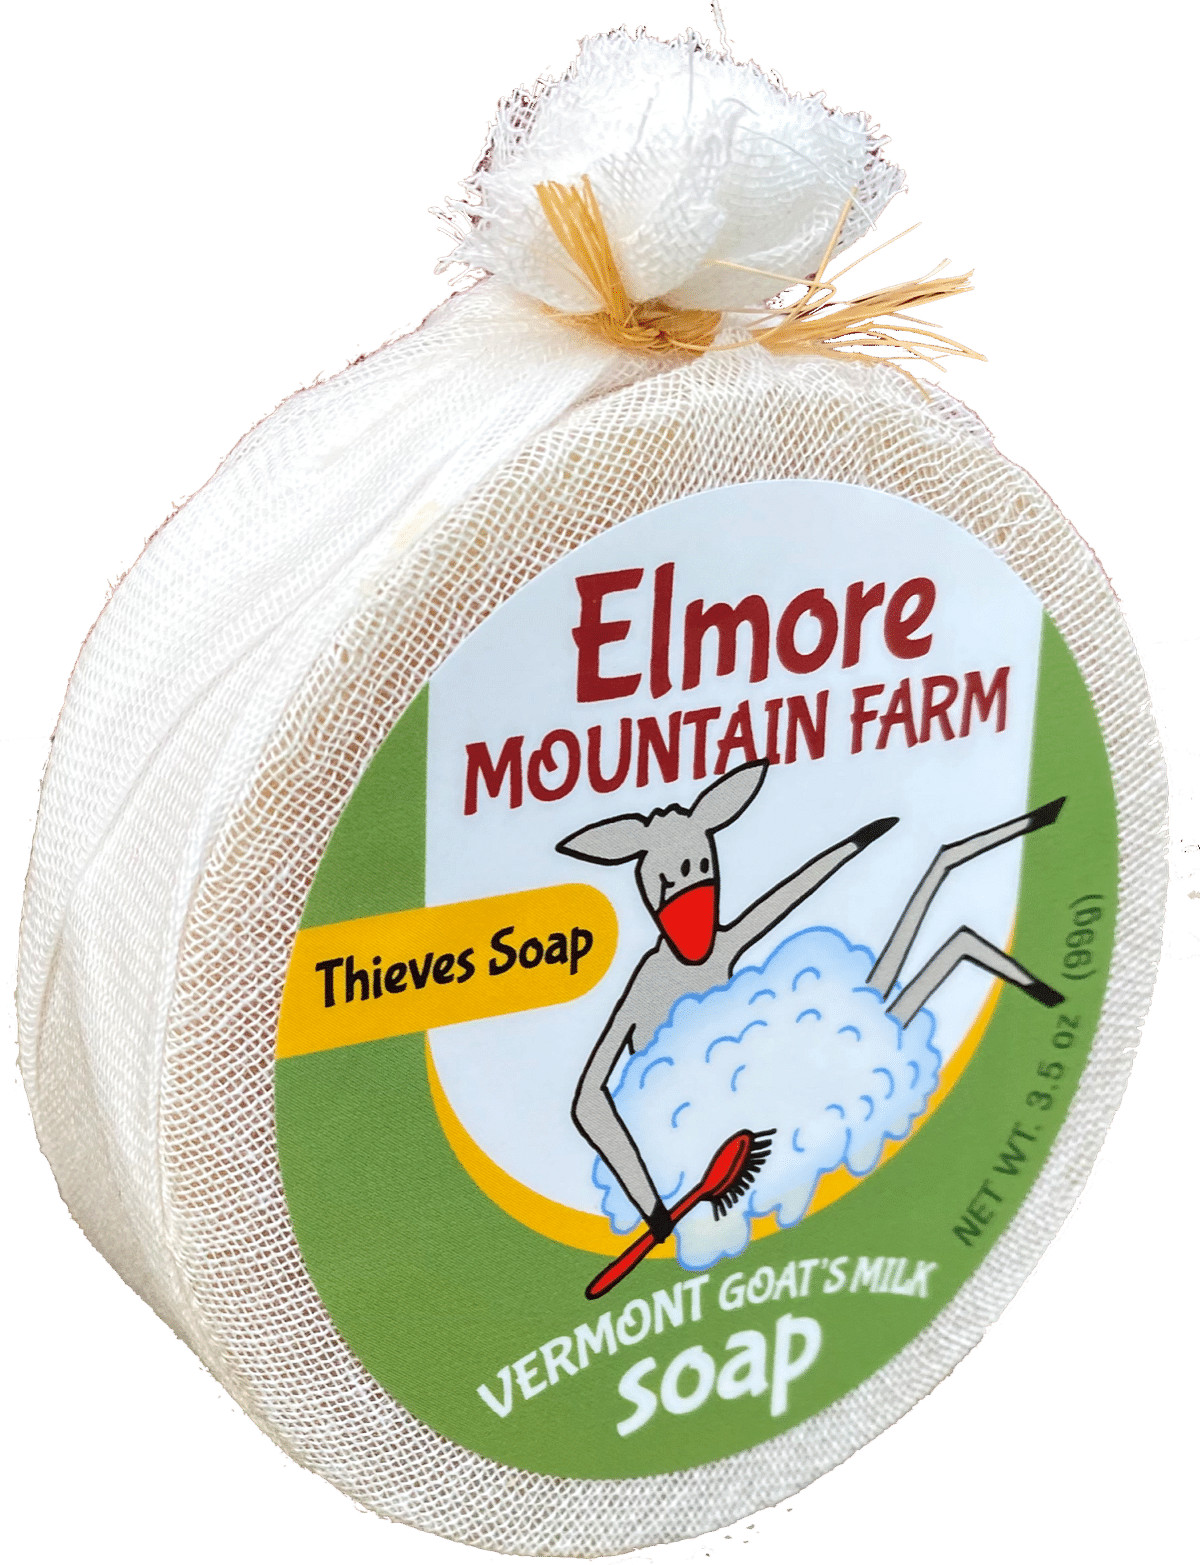 Elmore Mountain Farm Goat's Milk Soap - Thieves Soap - Shelburne Country Store